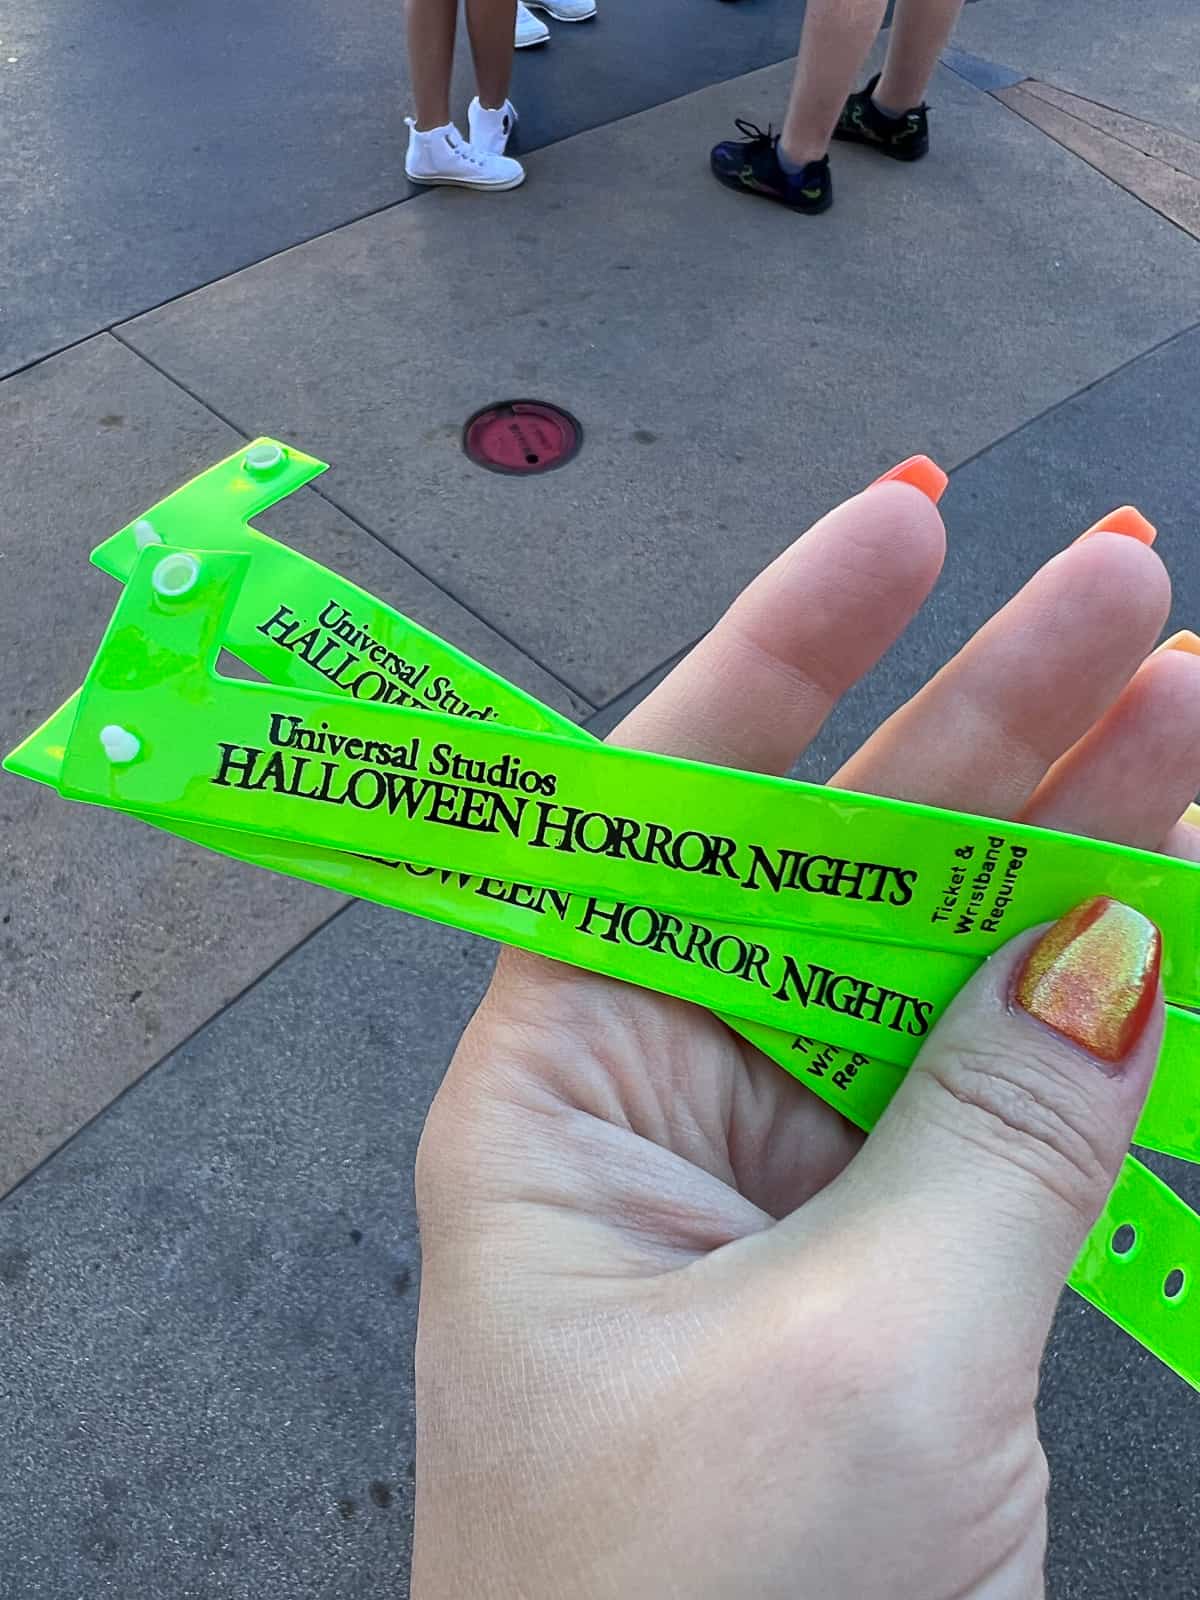 Universal Studios Halloween Horror Nights Wrist Band Tickets